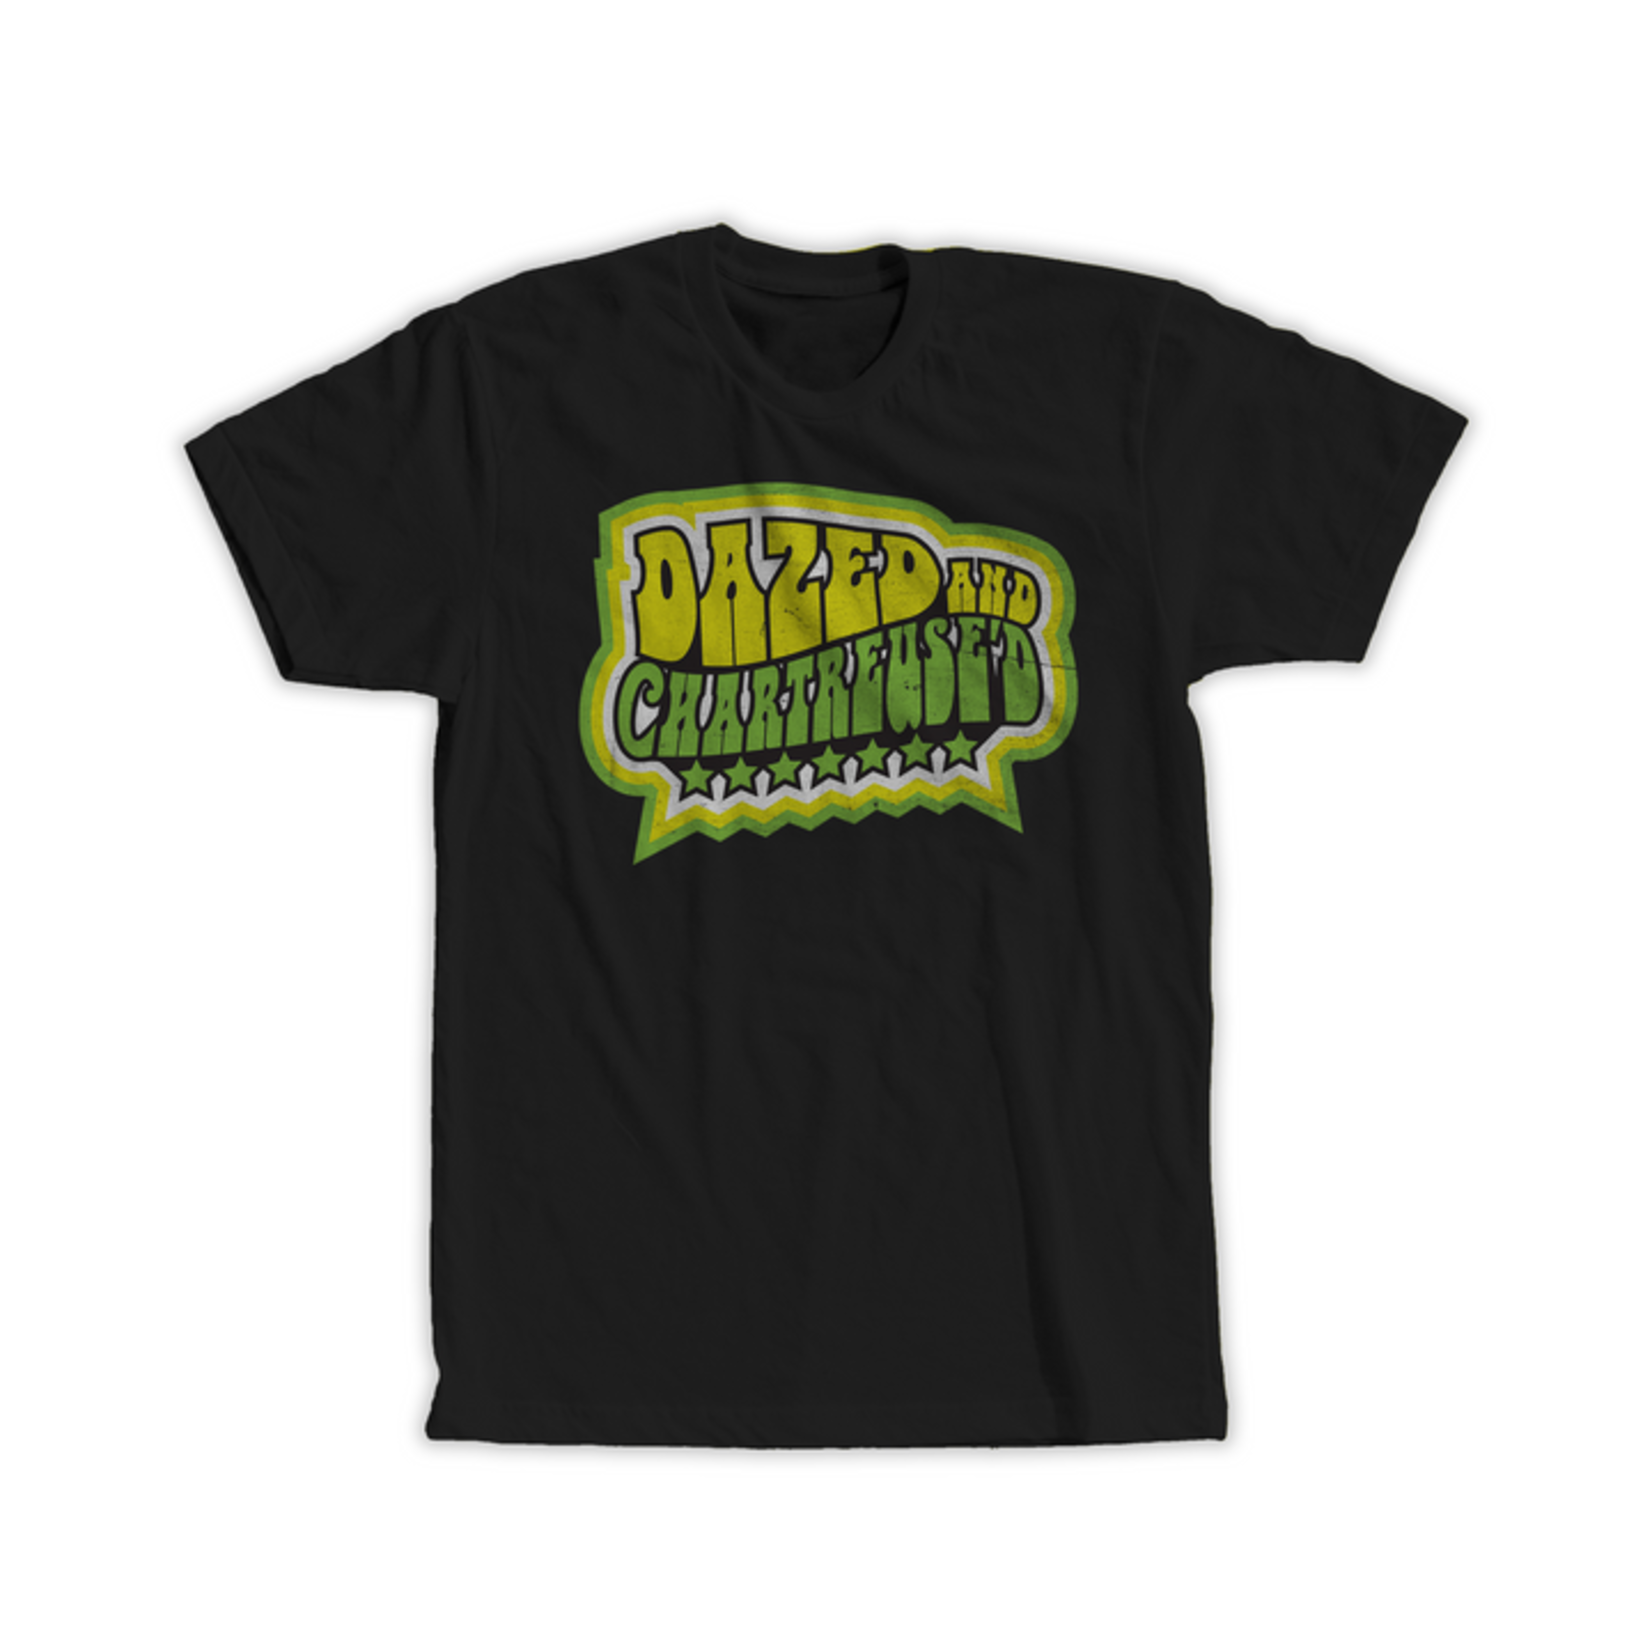 Dazed & Chartreuse'd T-Shirt